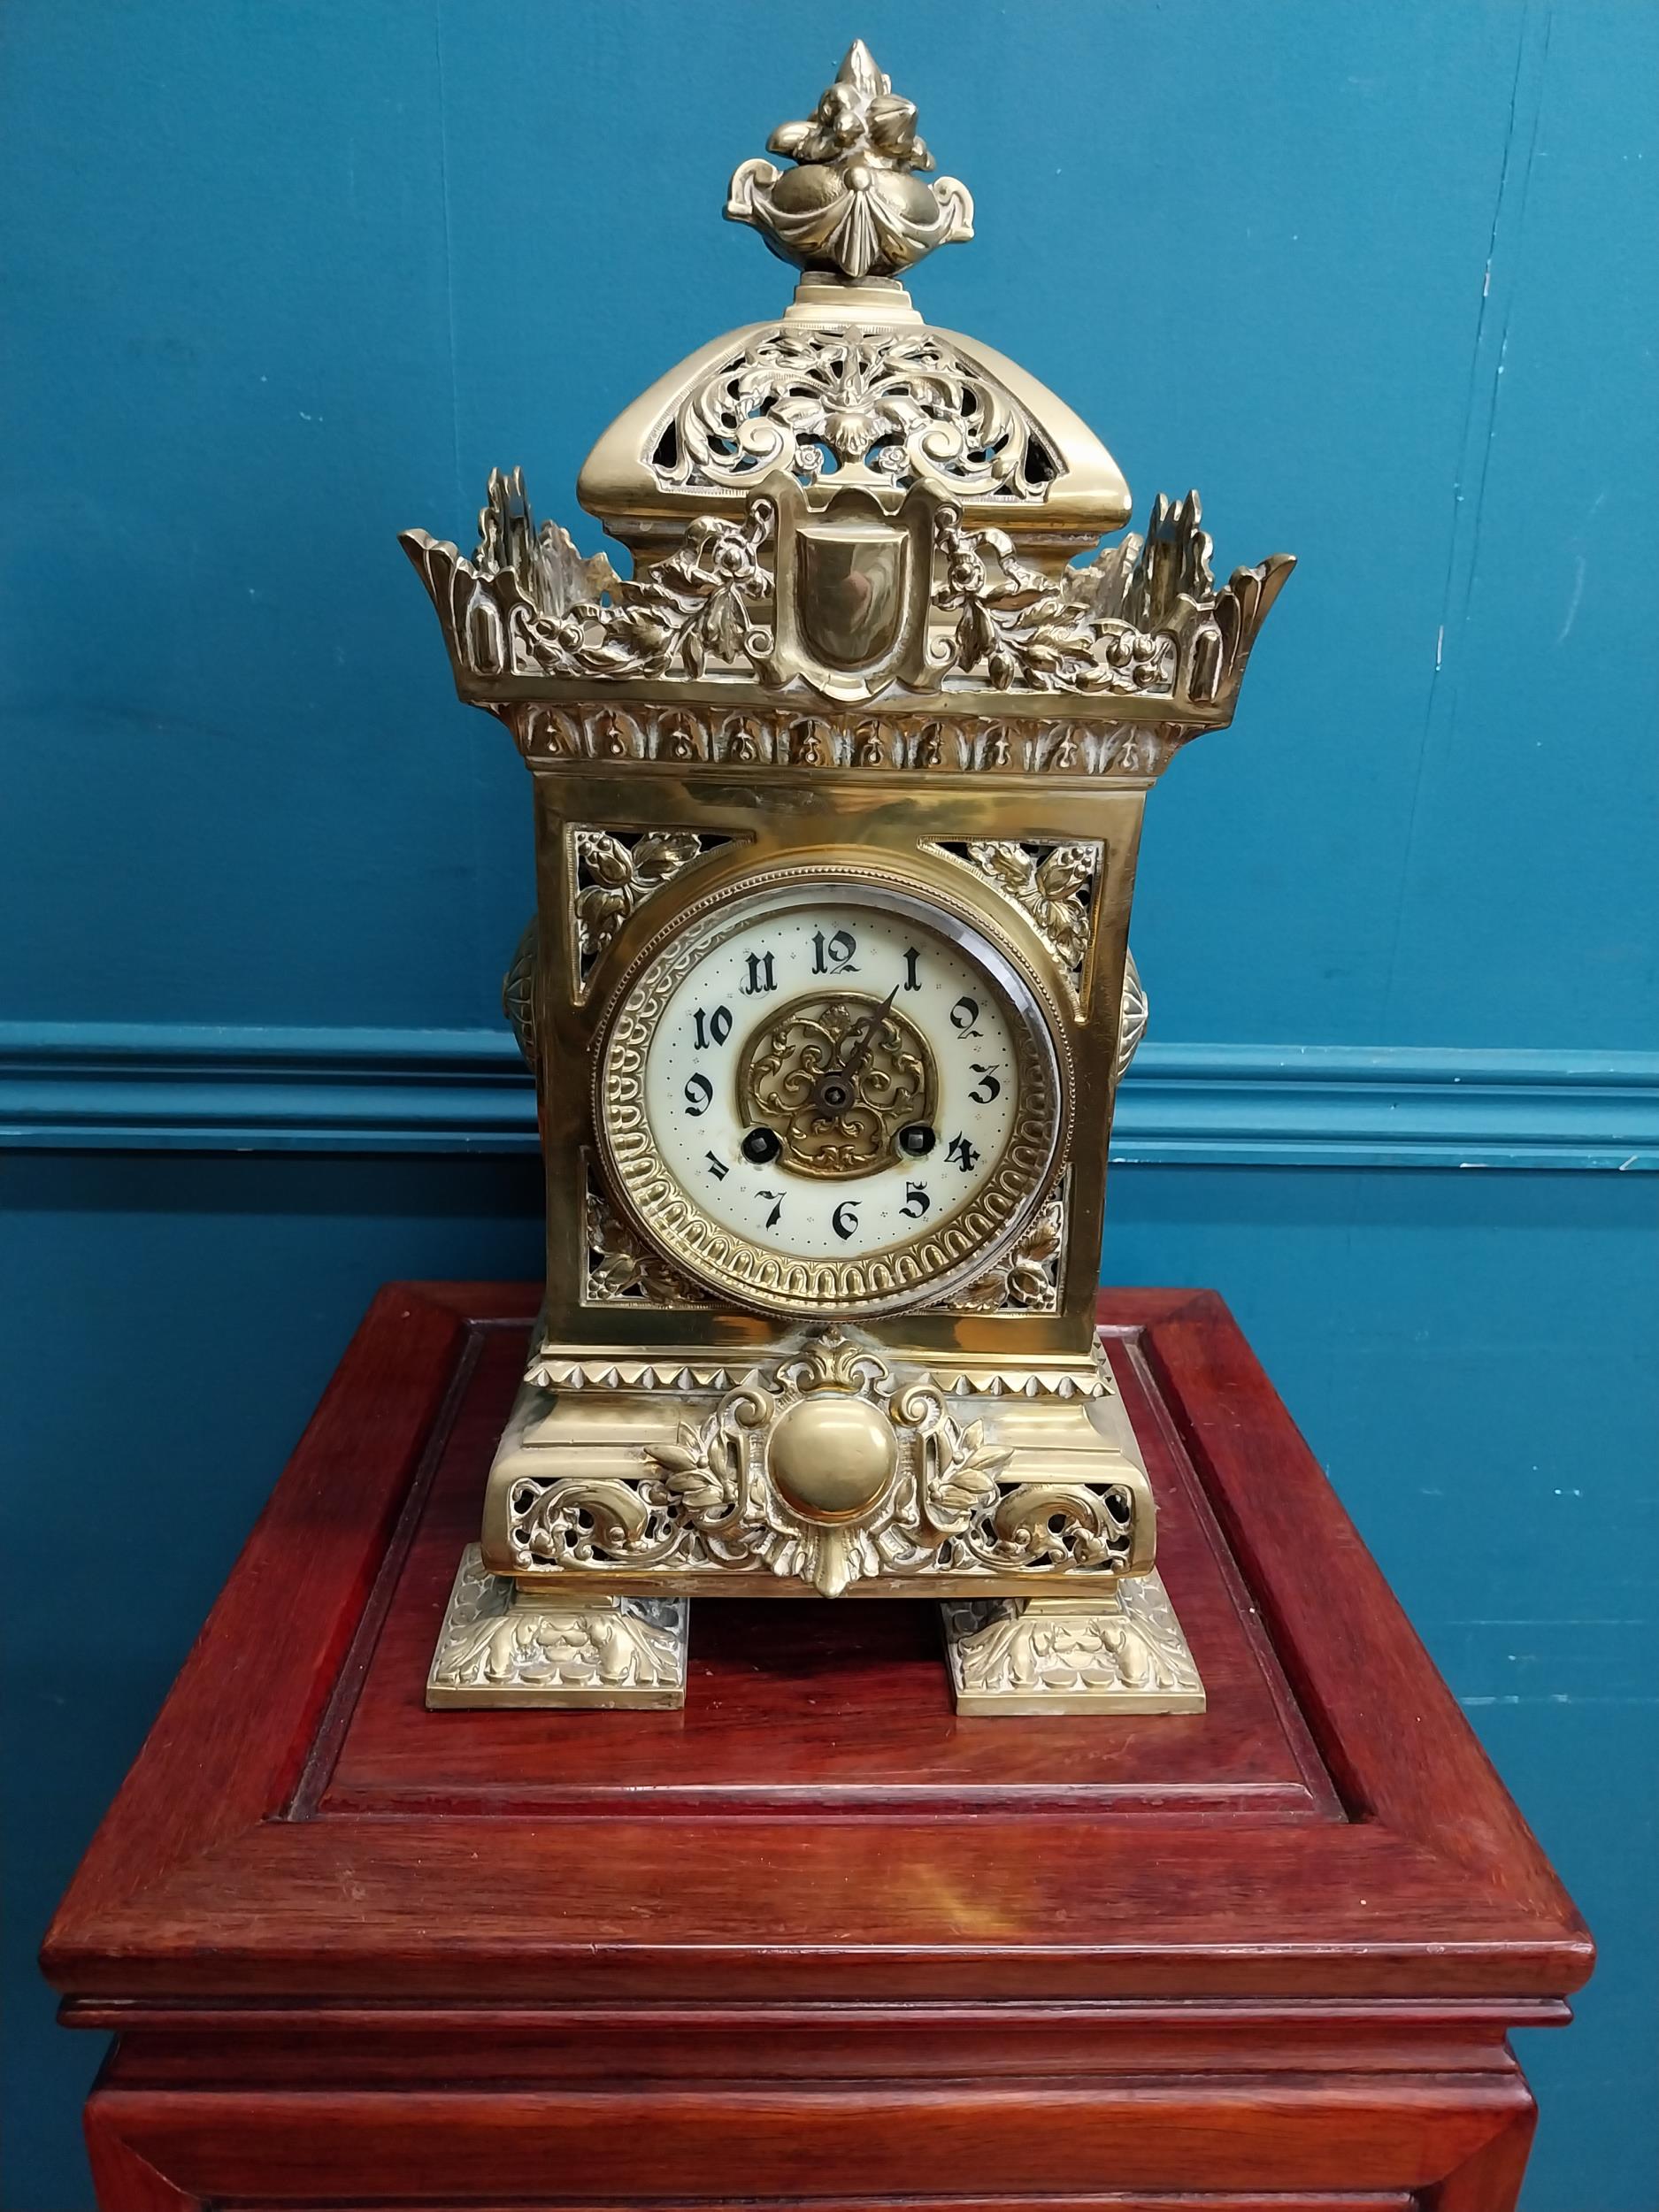 Decorative brass mantle clock in the Victorian style {39 cm H x 19 cm W x 19 cm D}.